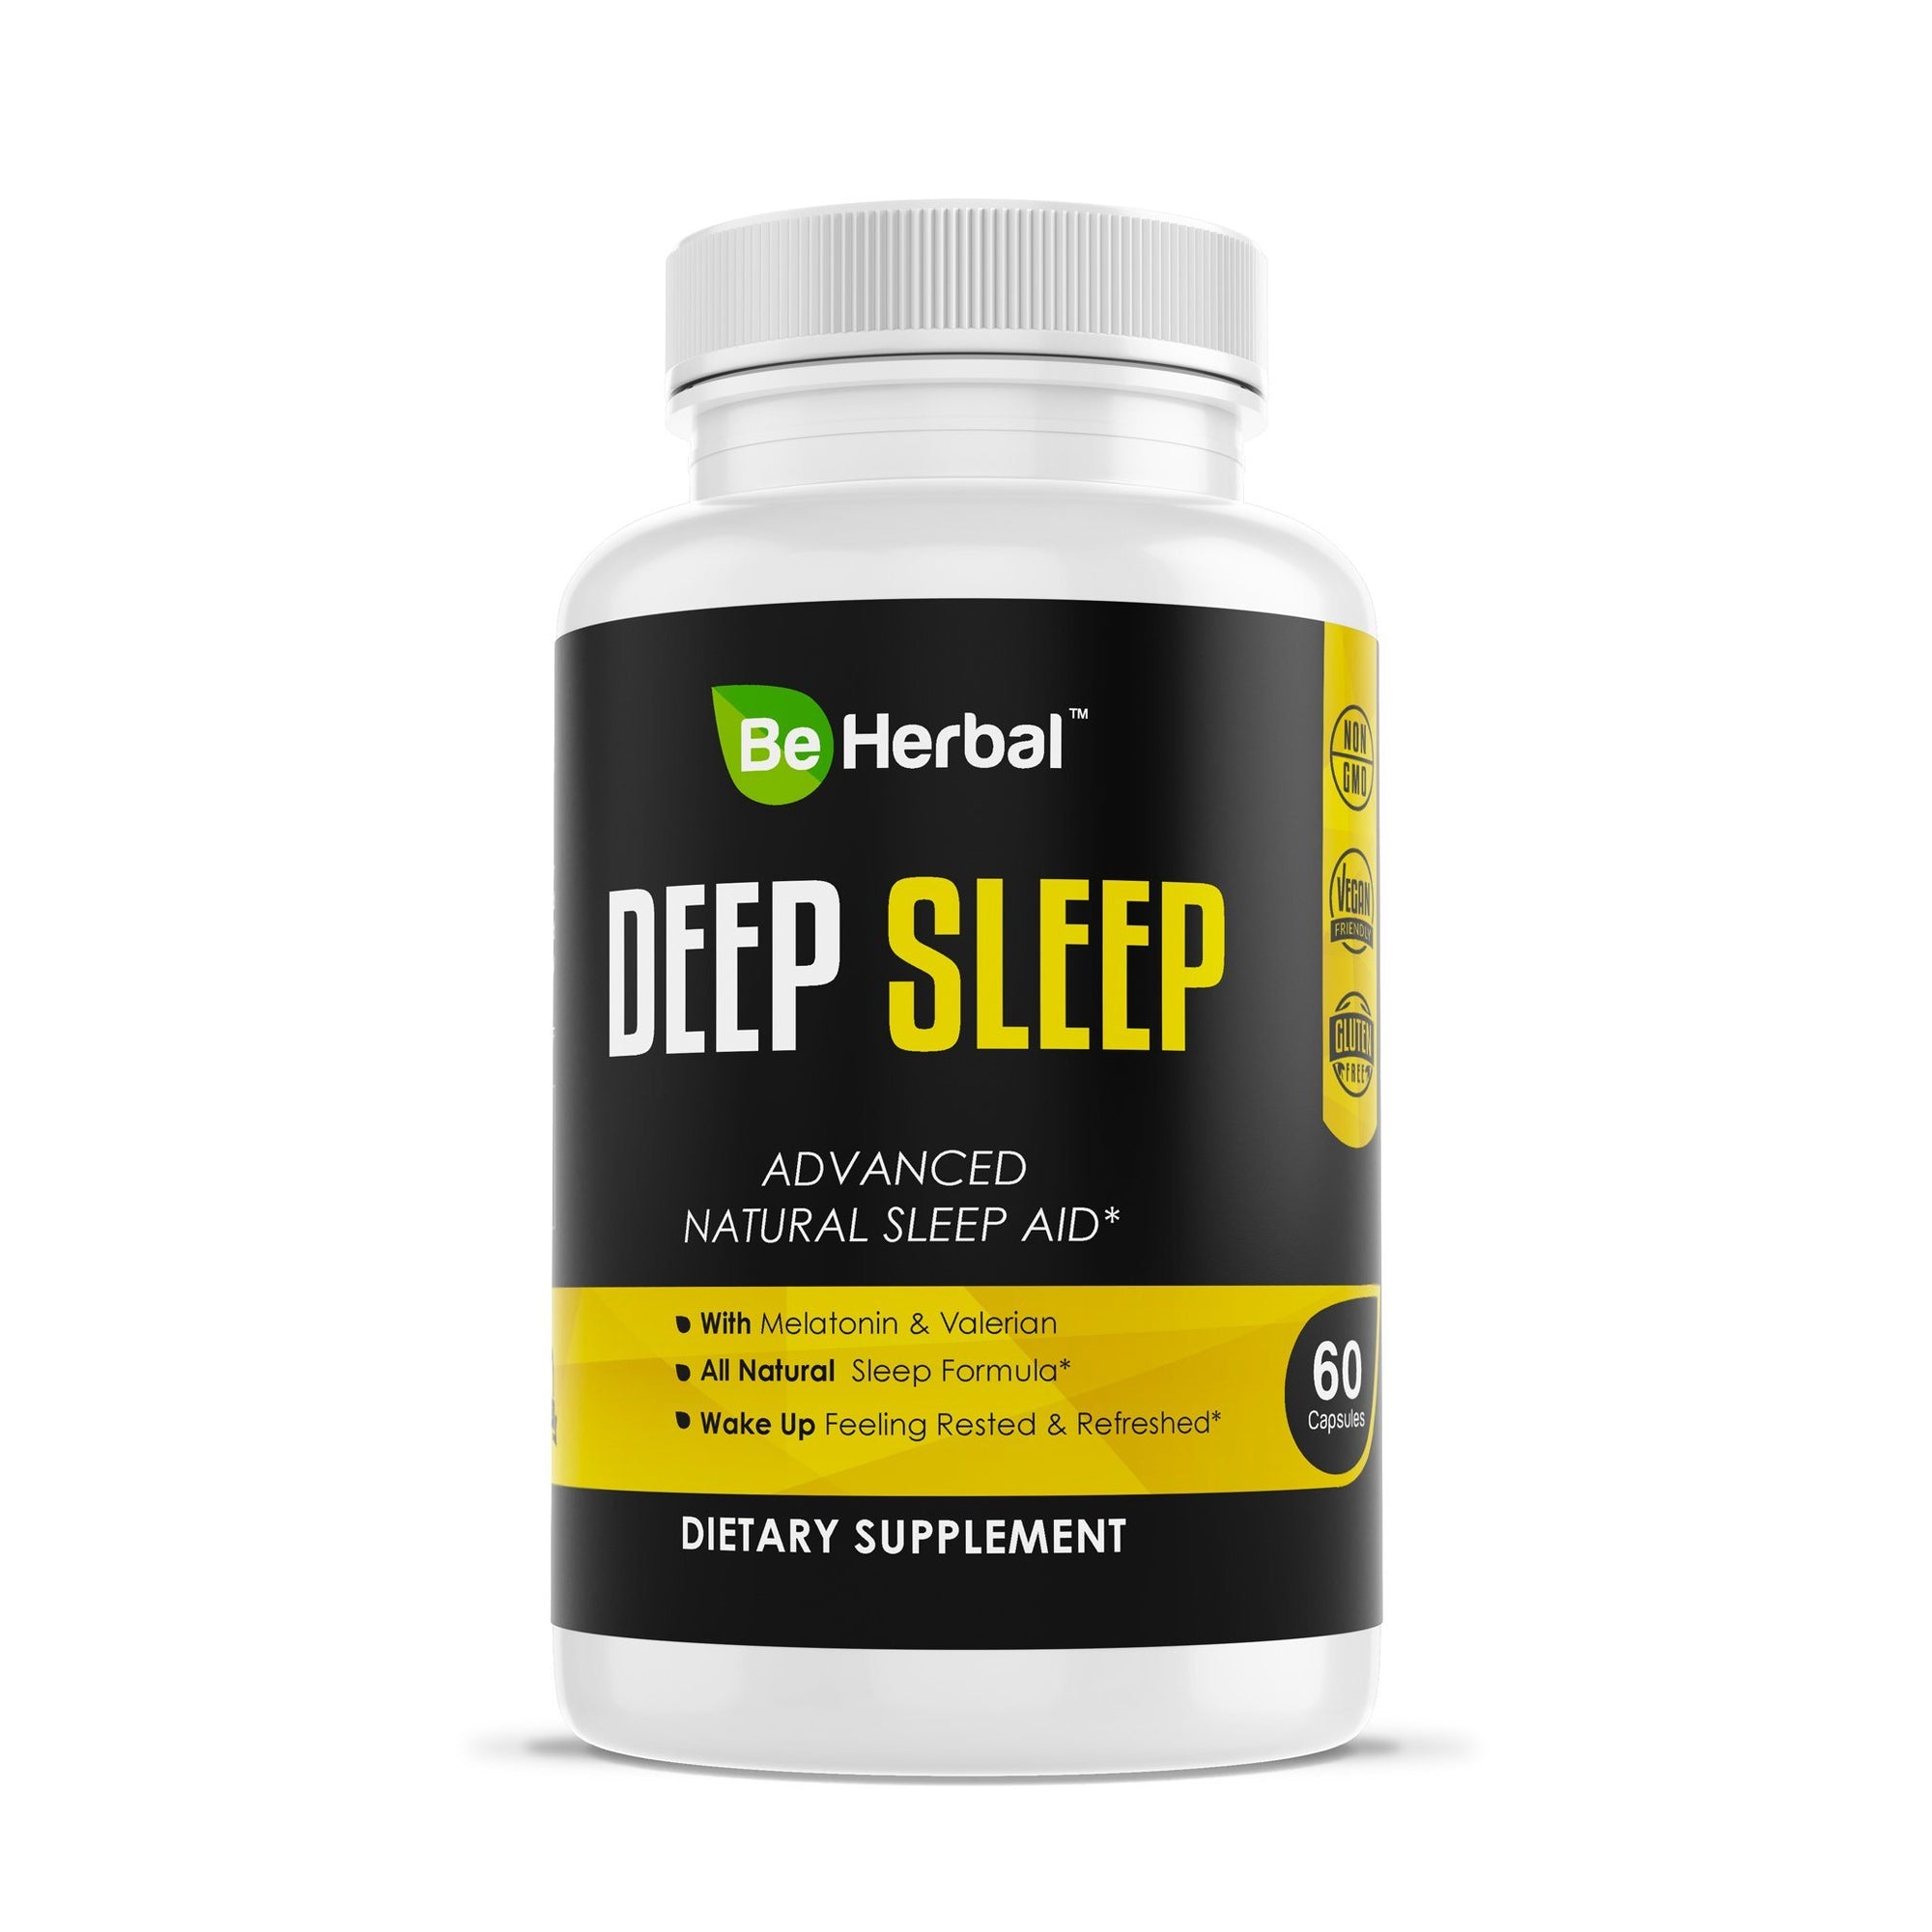 deep sleep supplement reddit